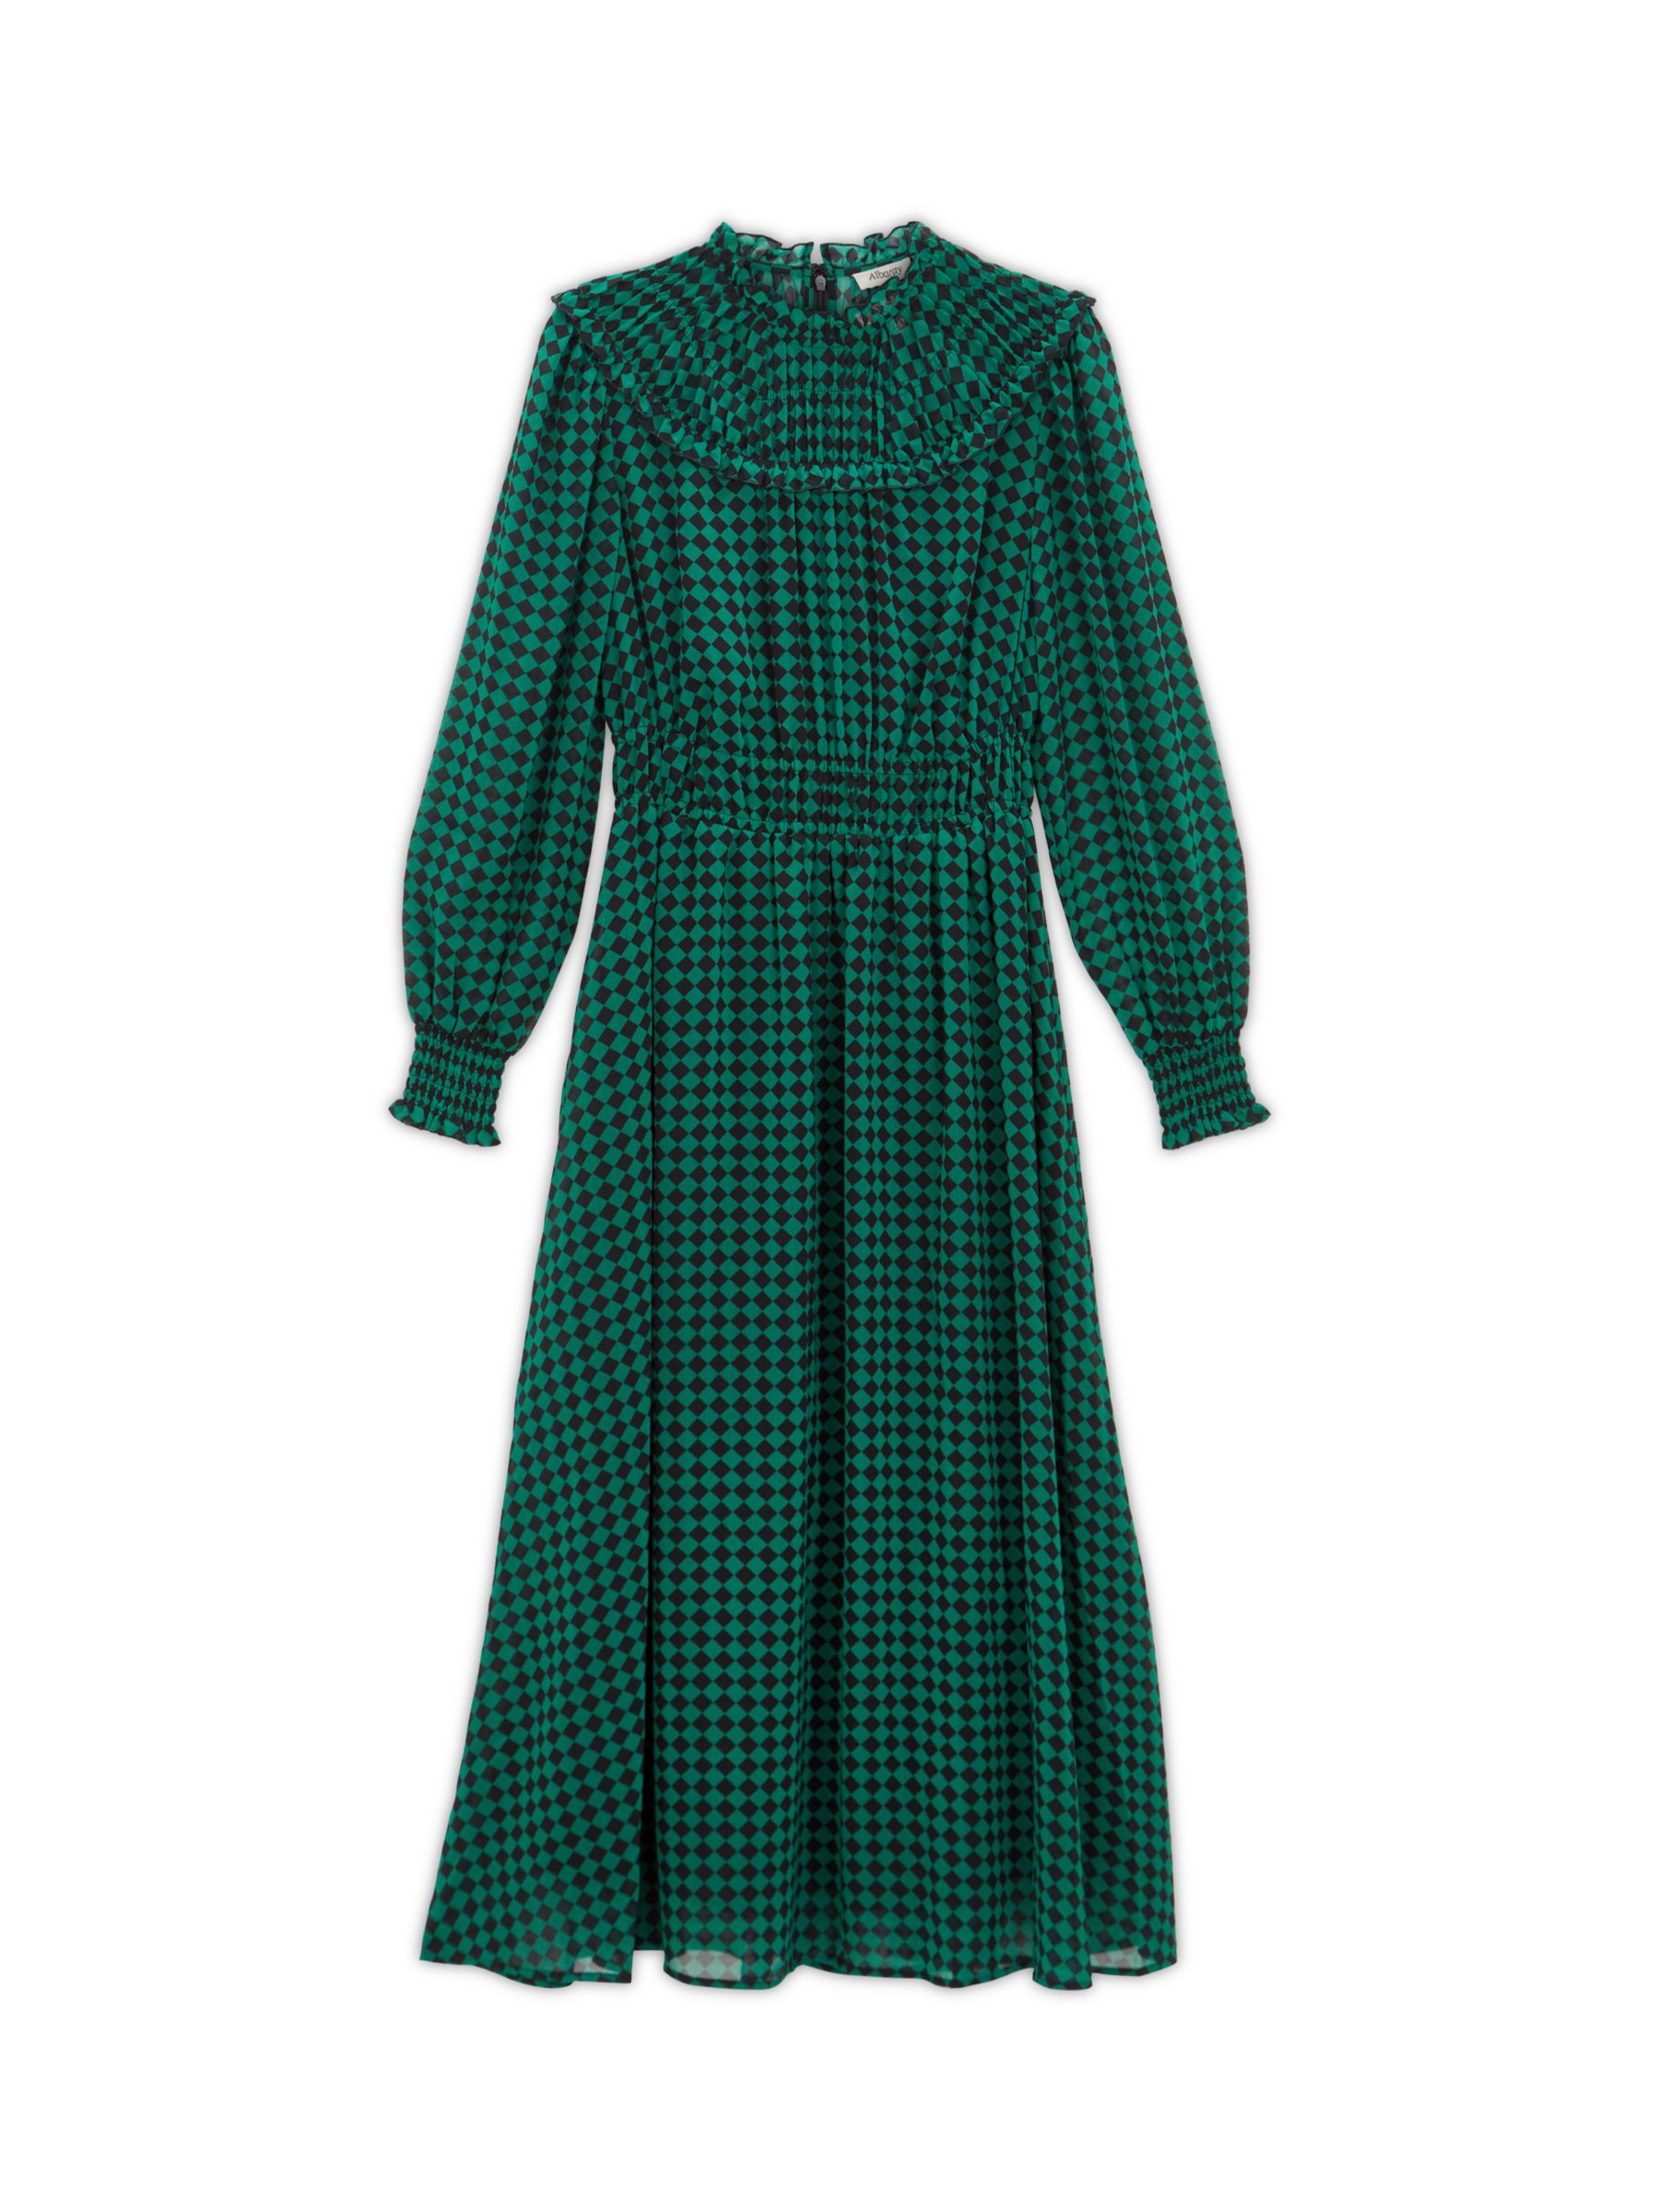 Albaray Harlequin Print Midi Dress, Green/Black, 8